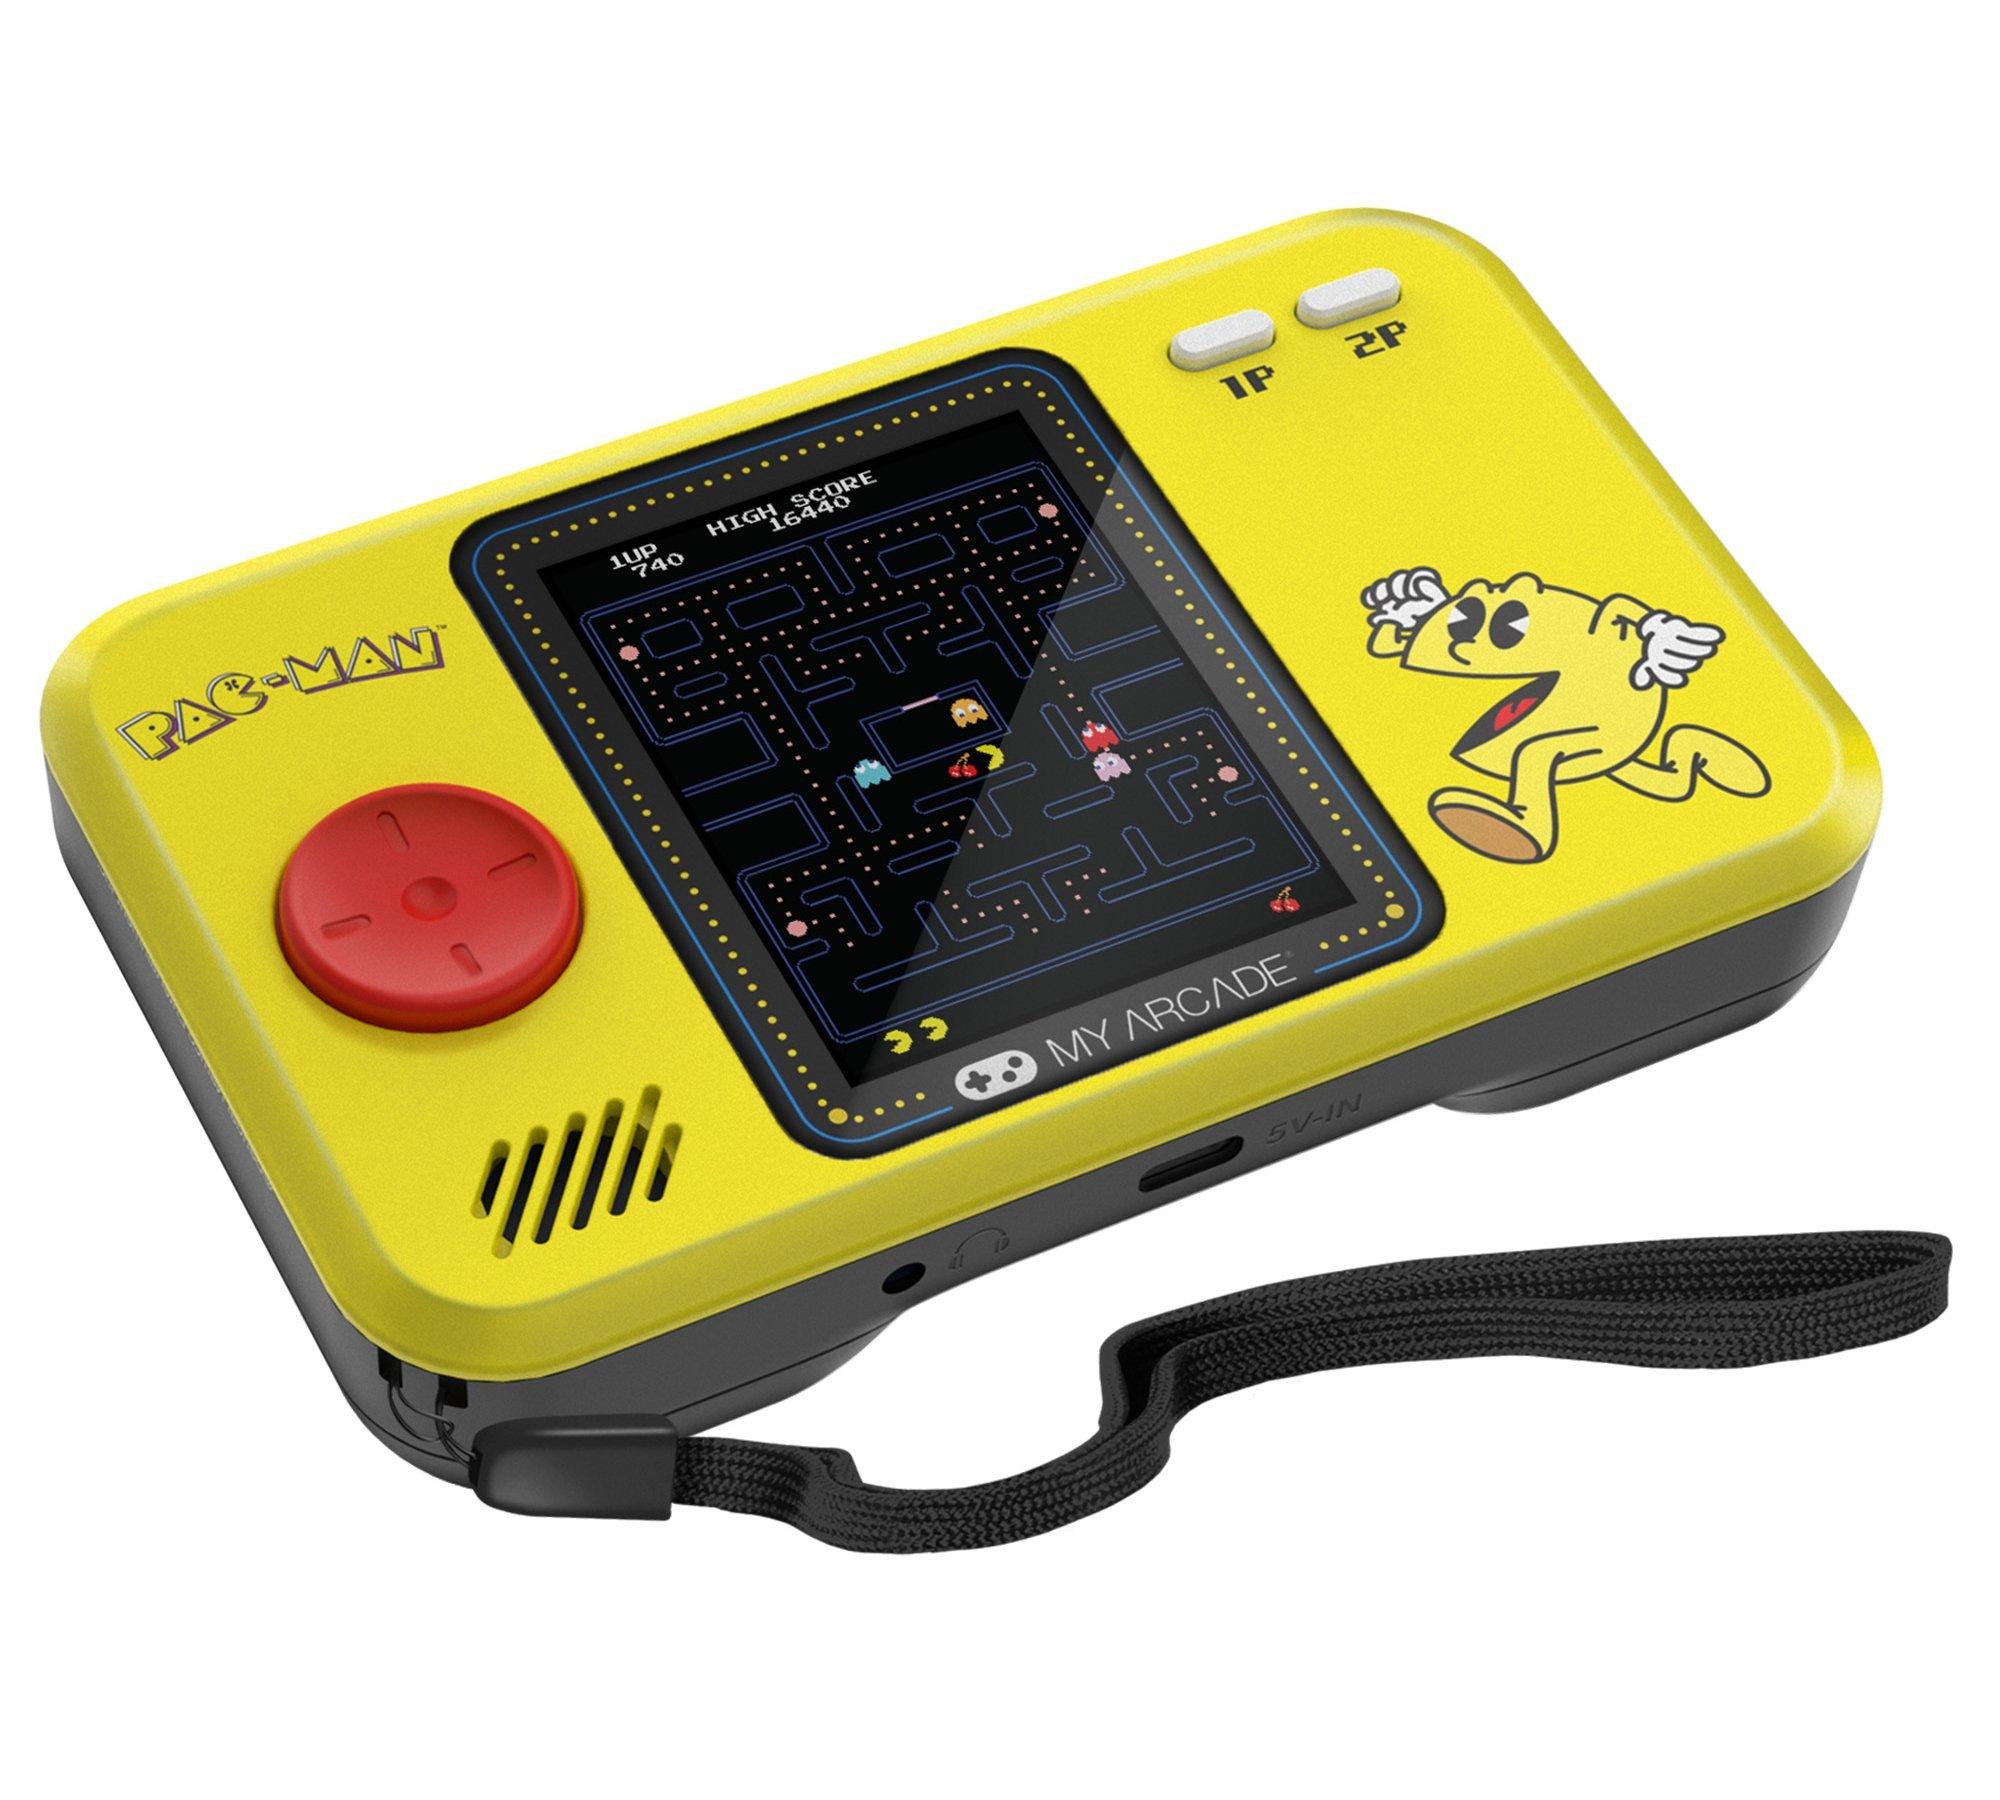 My Arcade PAC-MAN Pocket Player PRO Handheld Portable Video Game System